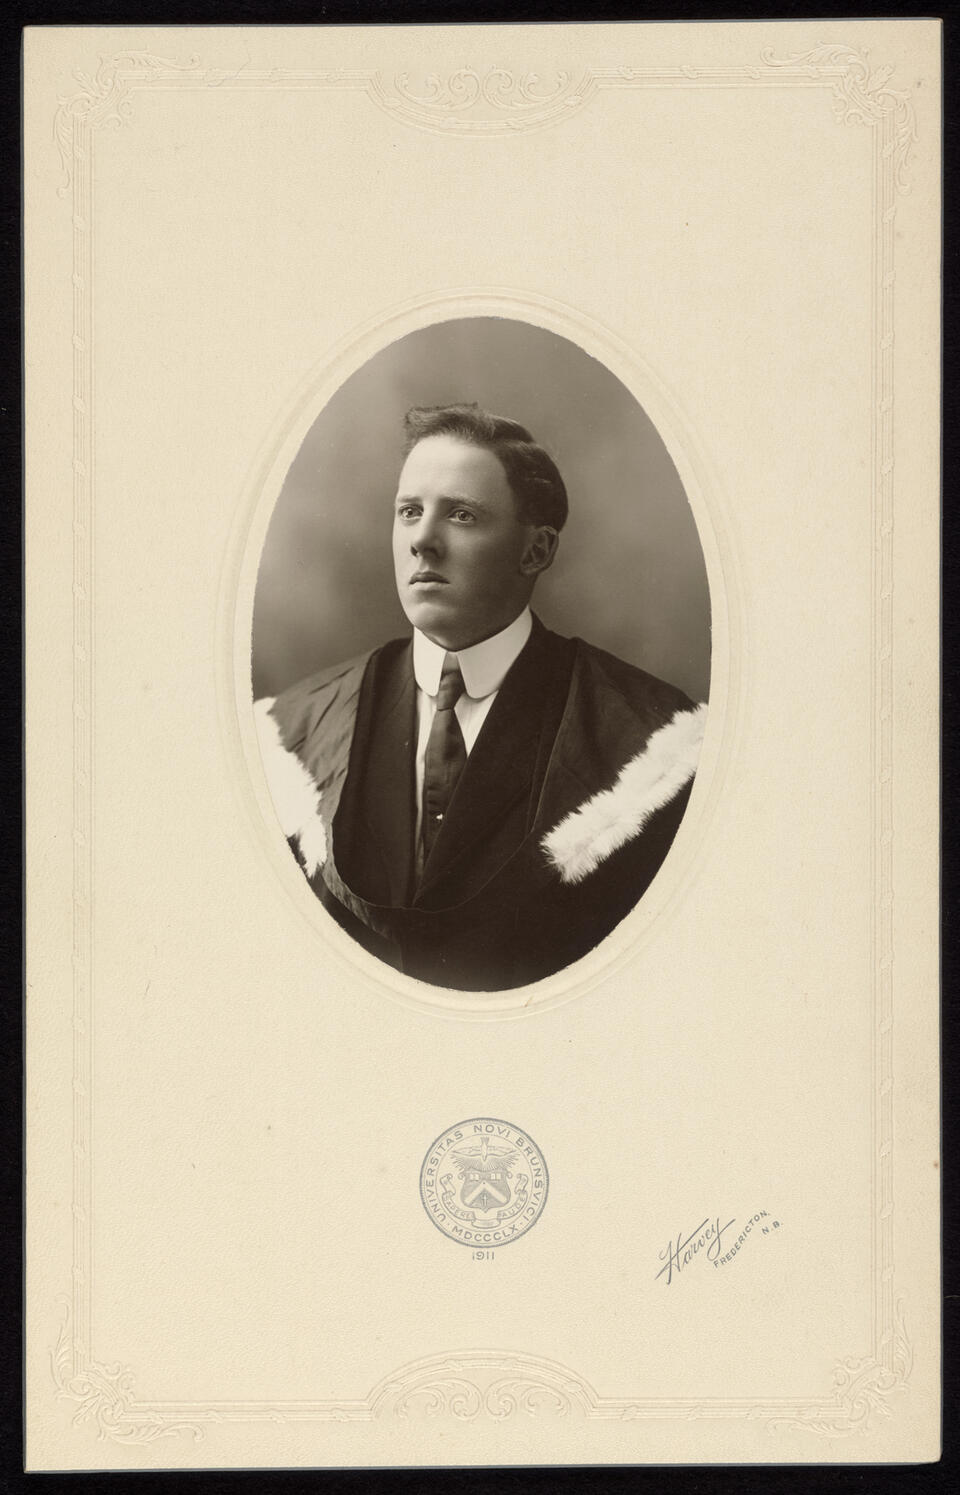 1911 George Skiffington Grimmer